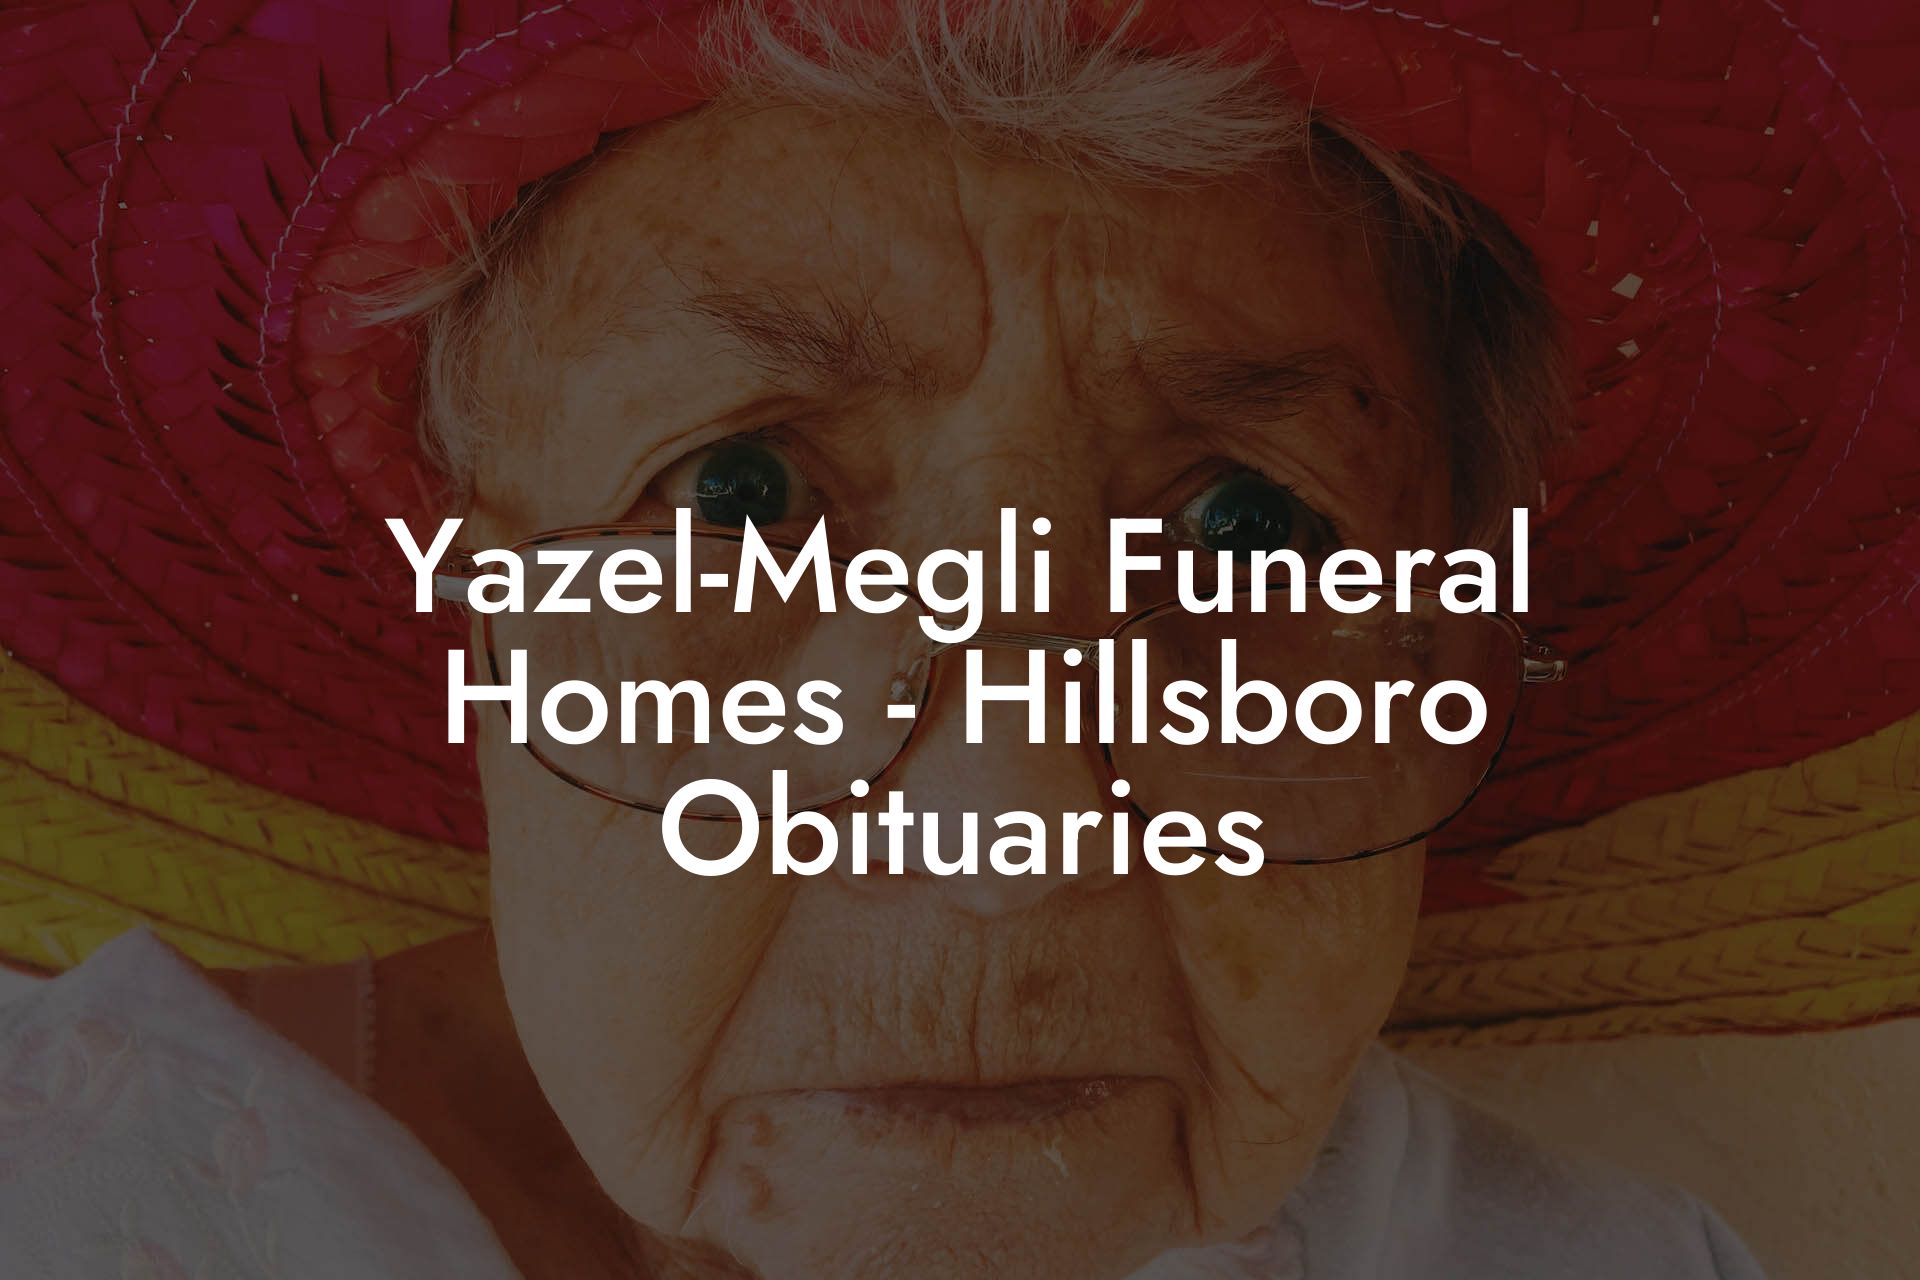 Yazel-Megli Funeral Homes - Hillsboro Obituaries